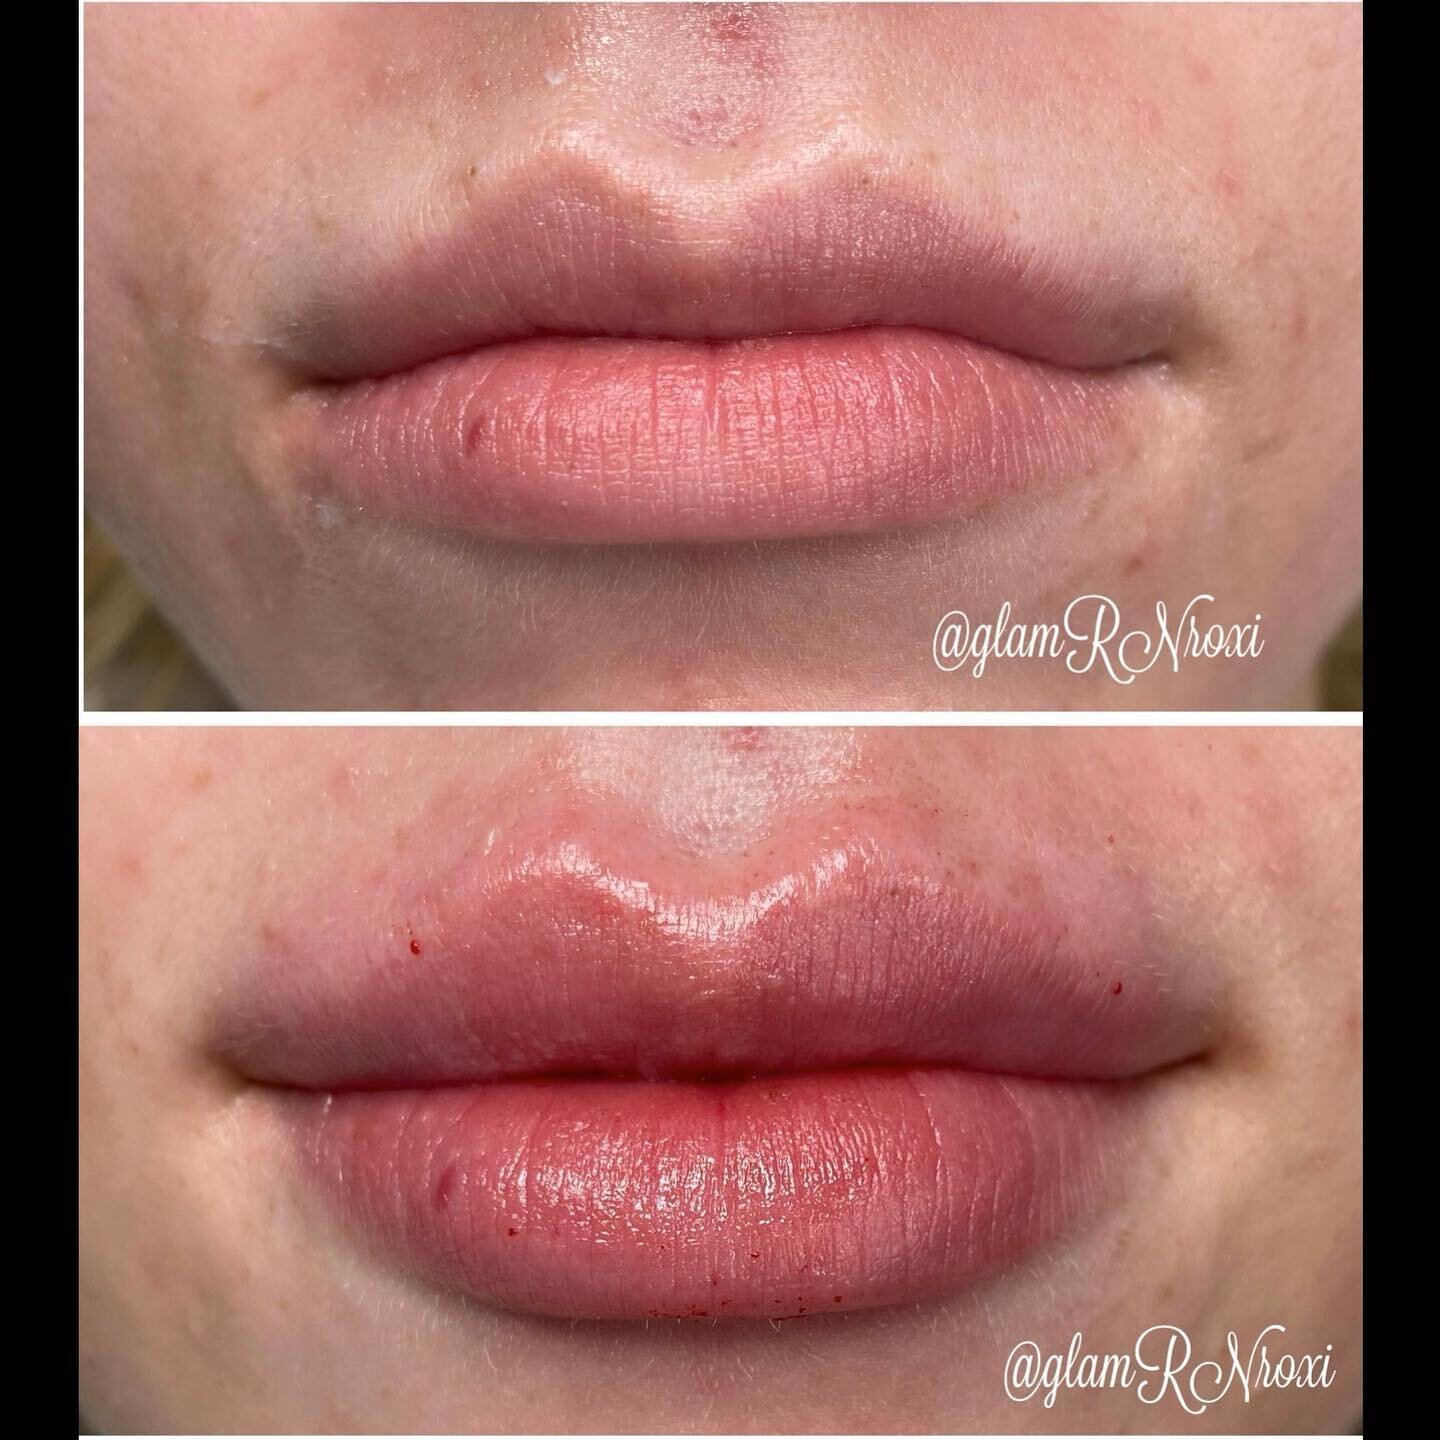 The way the shape turned out tho 💋🥰 #lips #lip #lipfiller  #lips #lipfiller #lipflip #lipinjections #lipinjectors #lipaugmentation #lipartist #liplove #lipart #pout #poutylips #lipstick
#utah #saltlakecity #transformation #beforeandafter #saltlakec